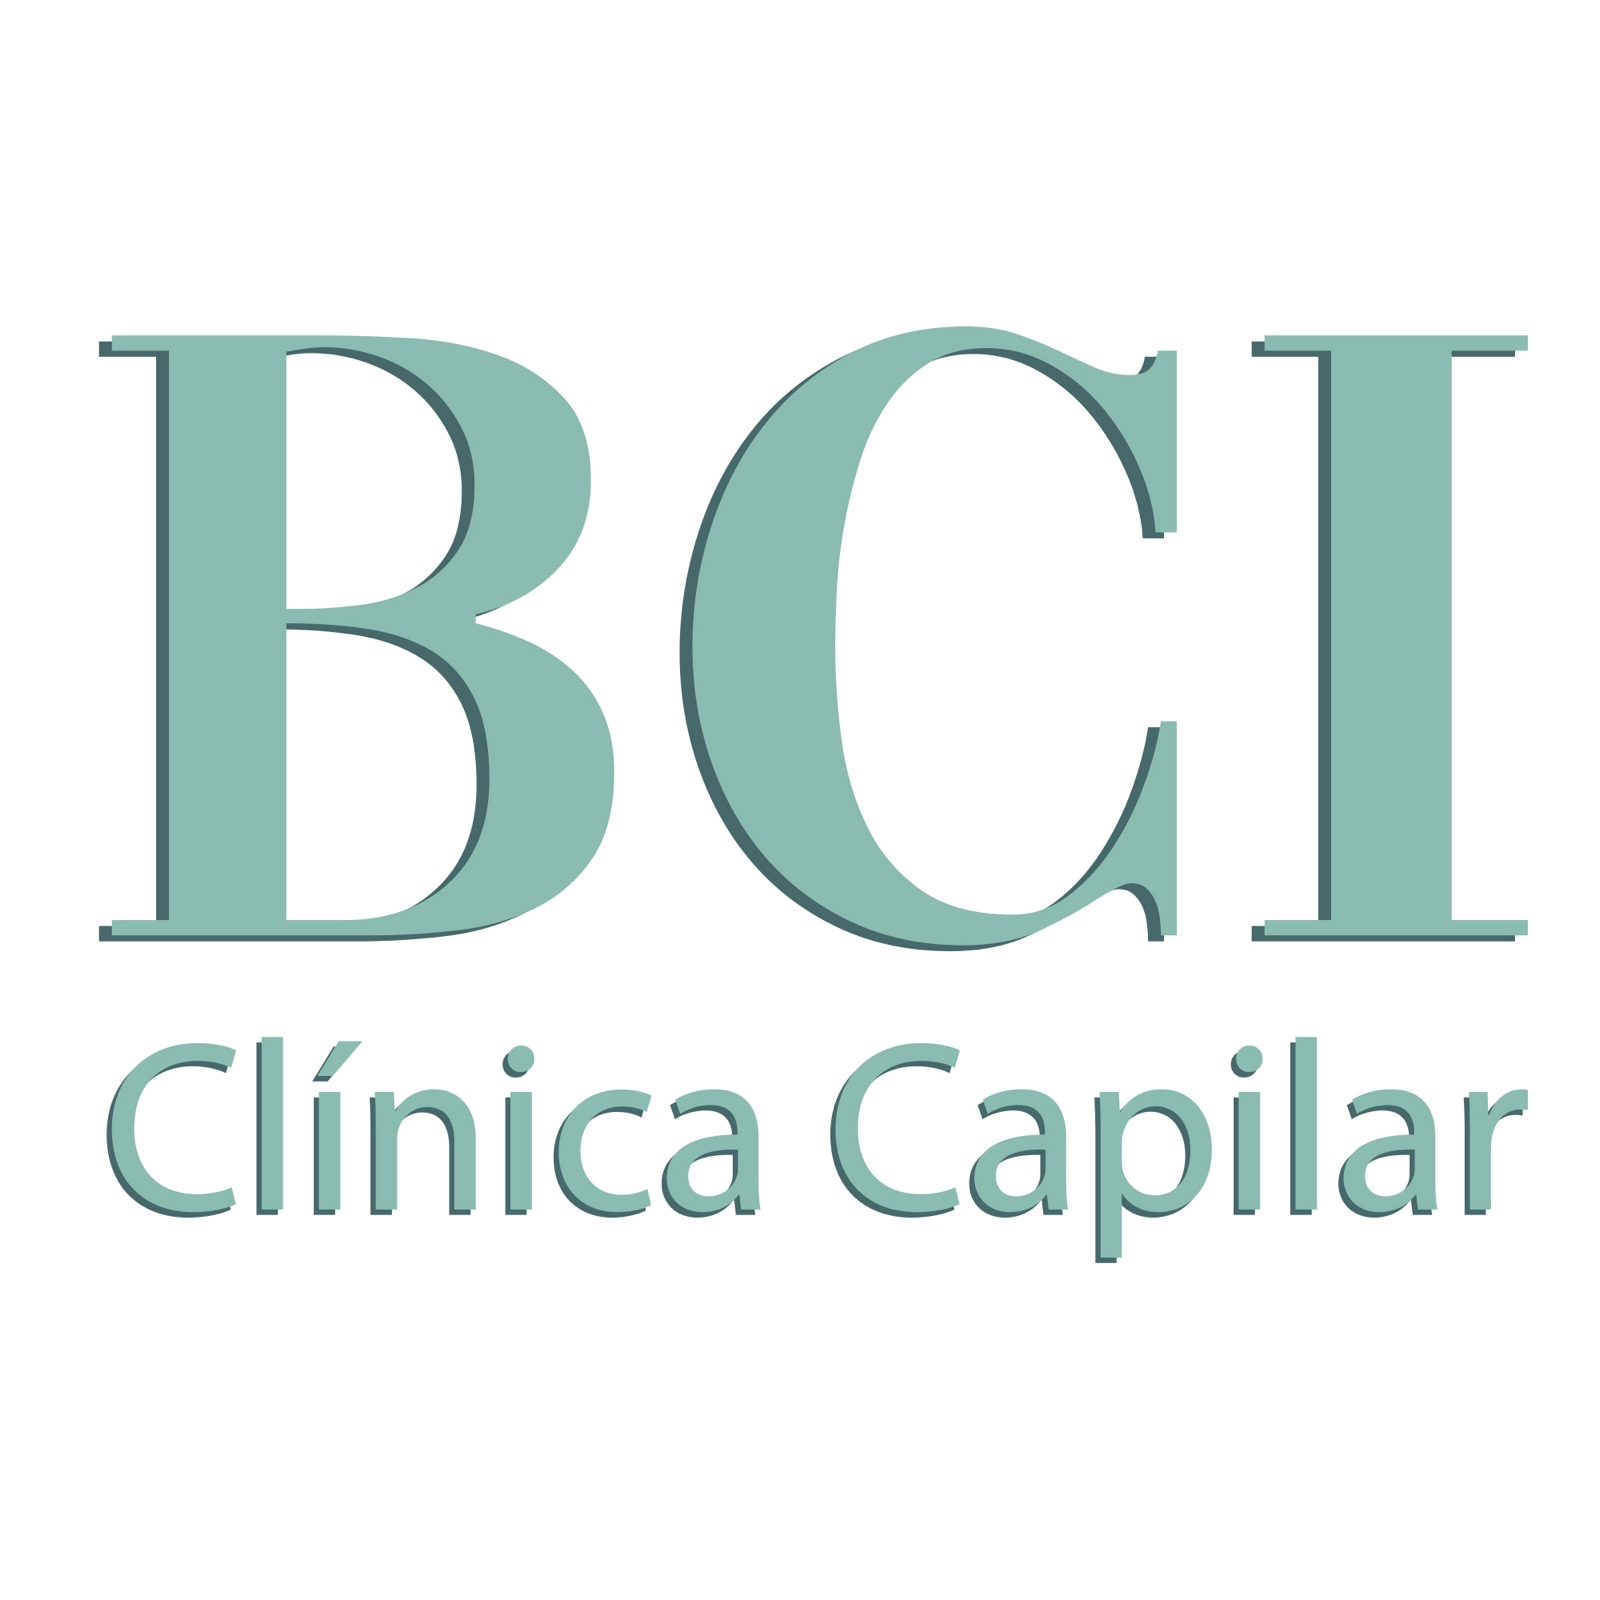 Clinica Capilar BCI